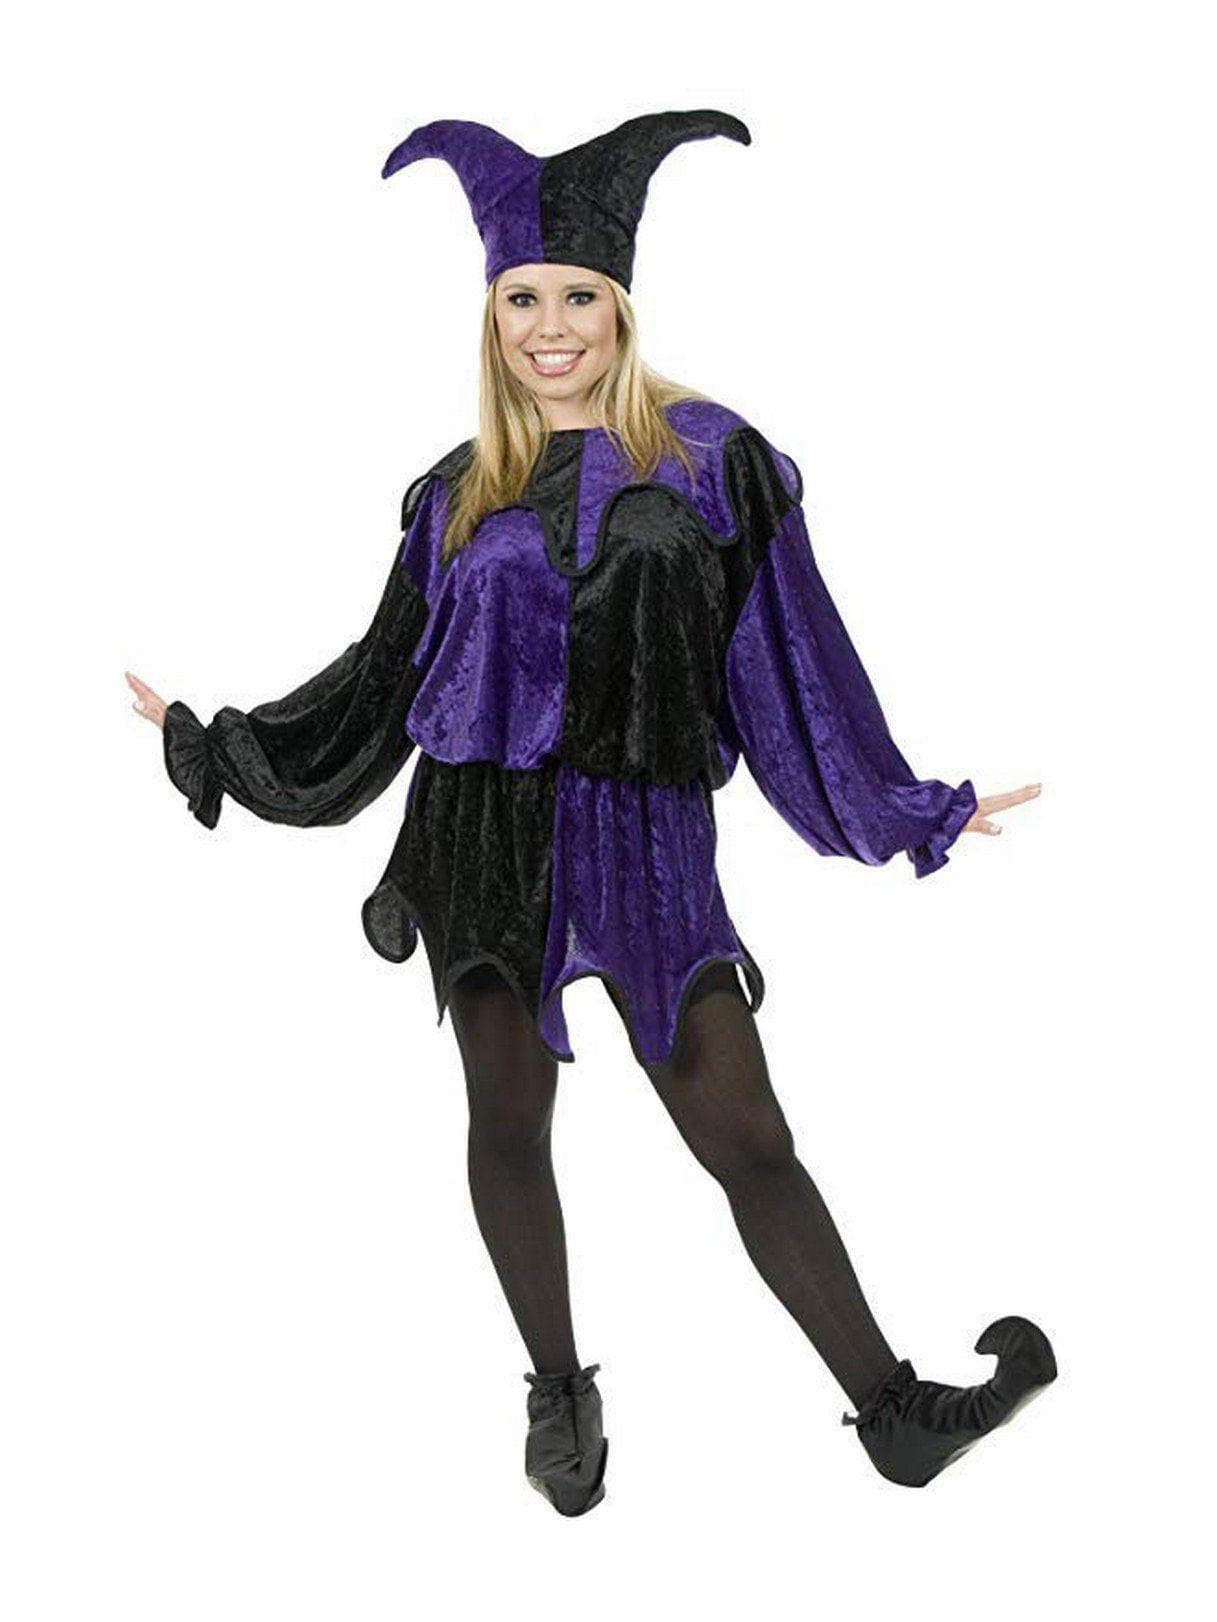 Adult Jester Plus Costume - costumes.com